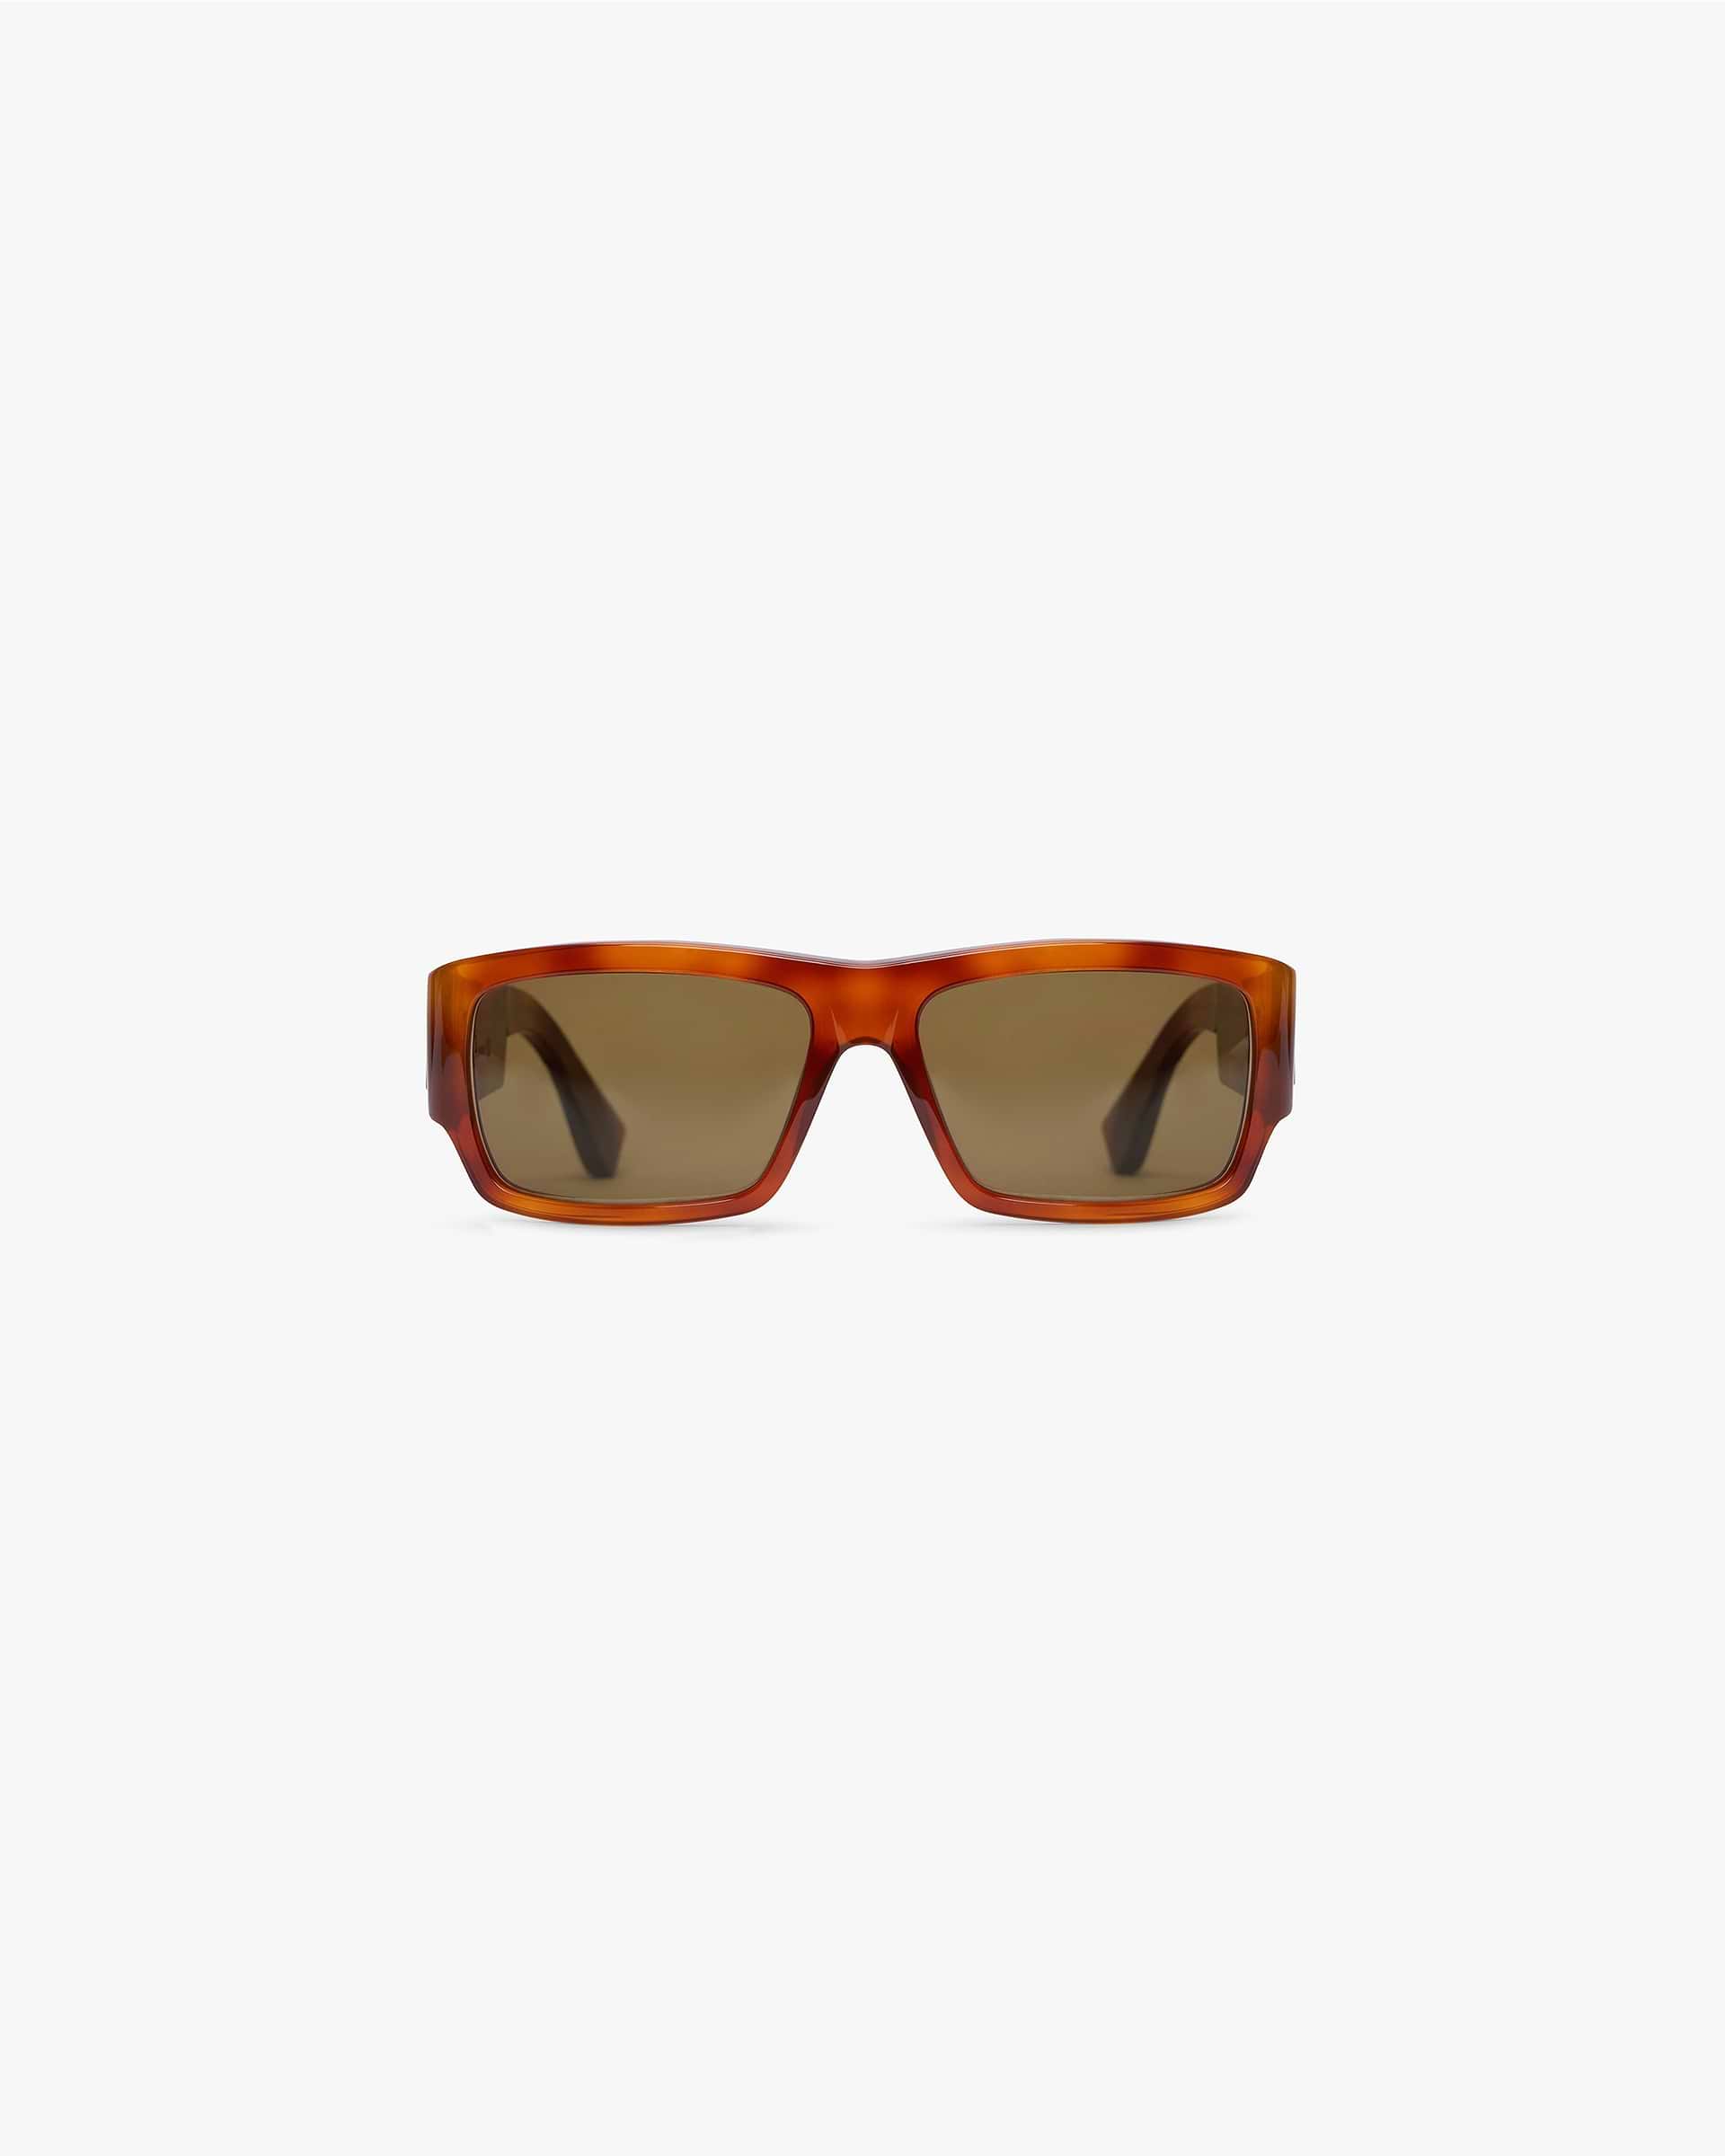 Initial Sunglasses | Tortoise Shell Accessories SC22 | Represent Clo